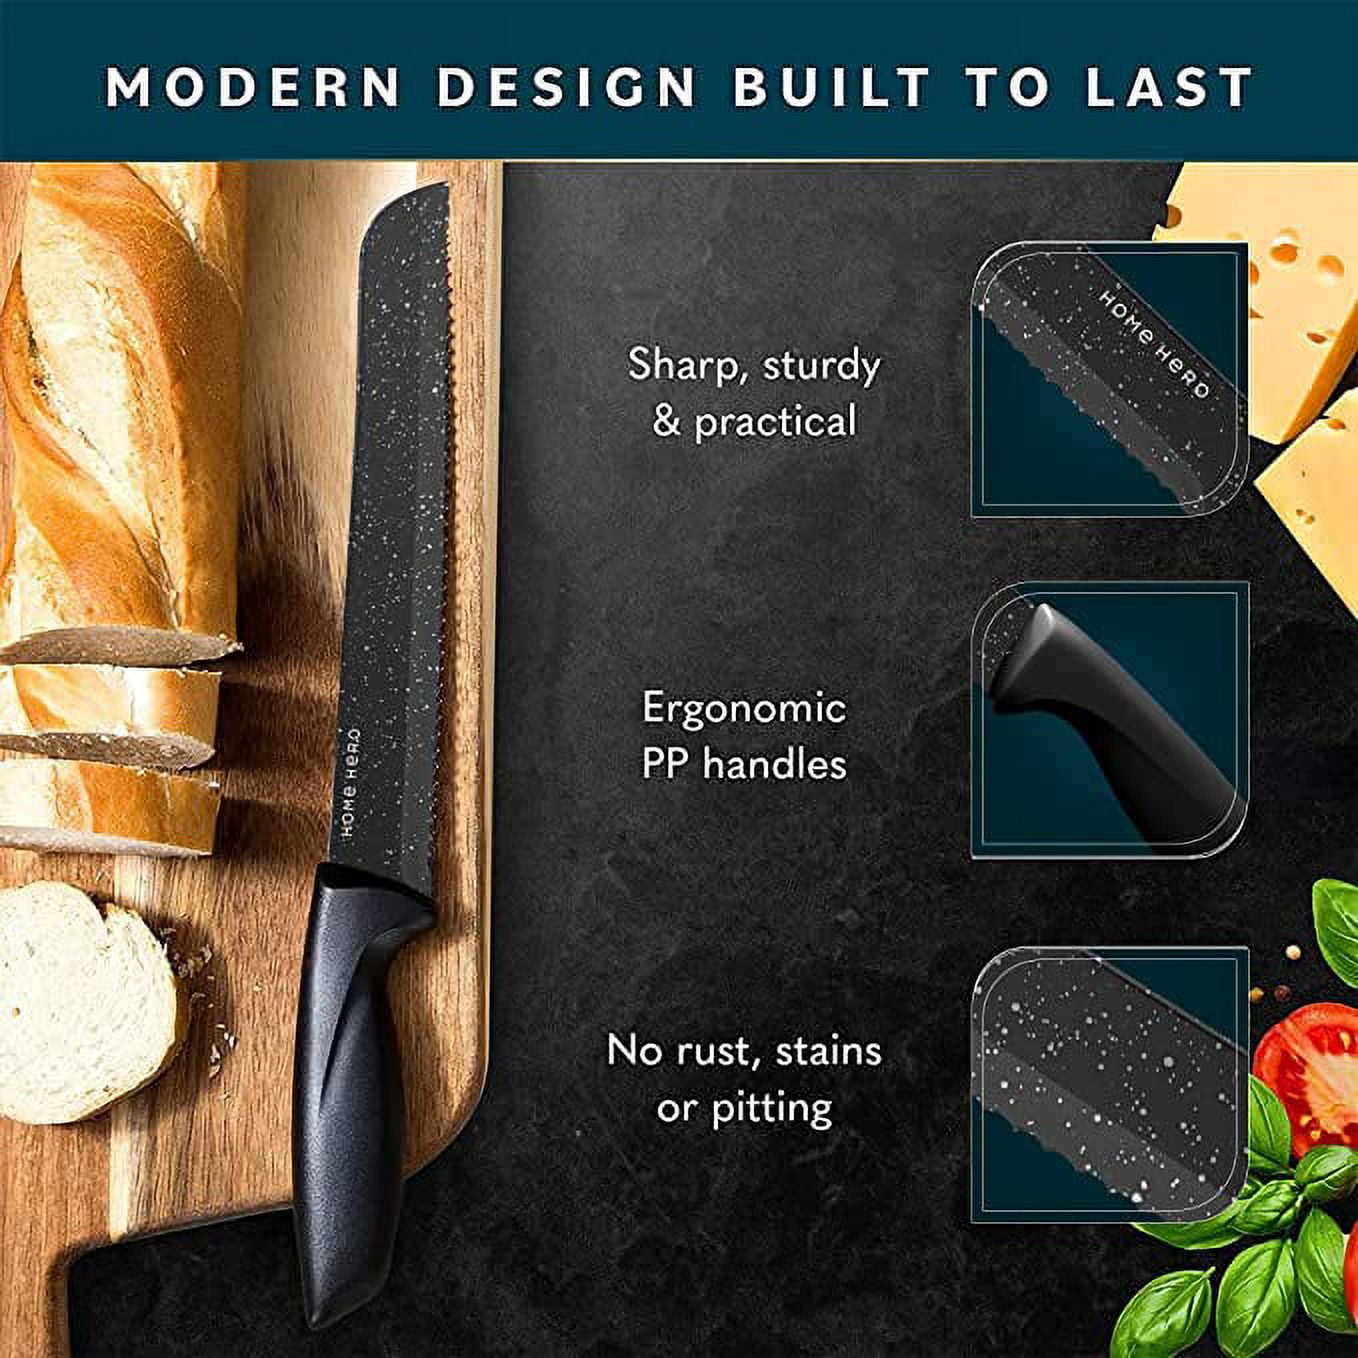 Home Hero Kitchen Knife Set & Steak Knife Set - 8-Pcs Ultra-Sharp High  Carbon Stainless Steel Knives Set - Non-Stick Coated Chef Knife Set with  Ergonomic Handles 